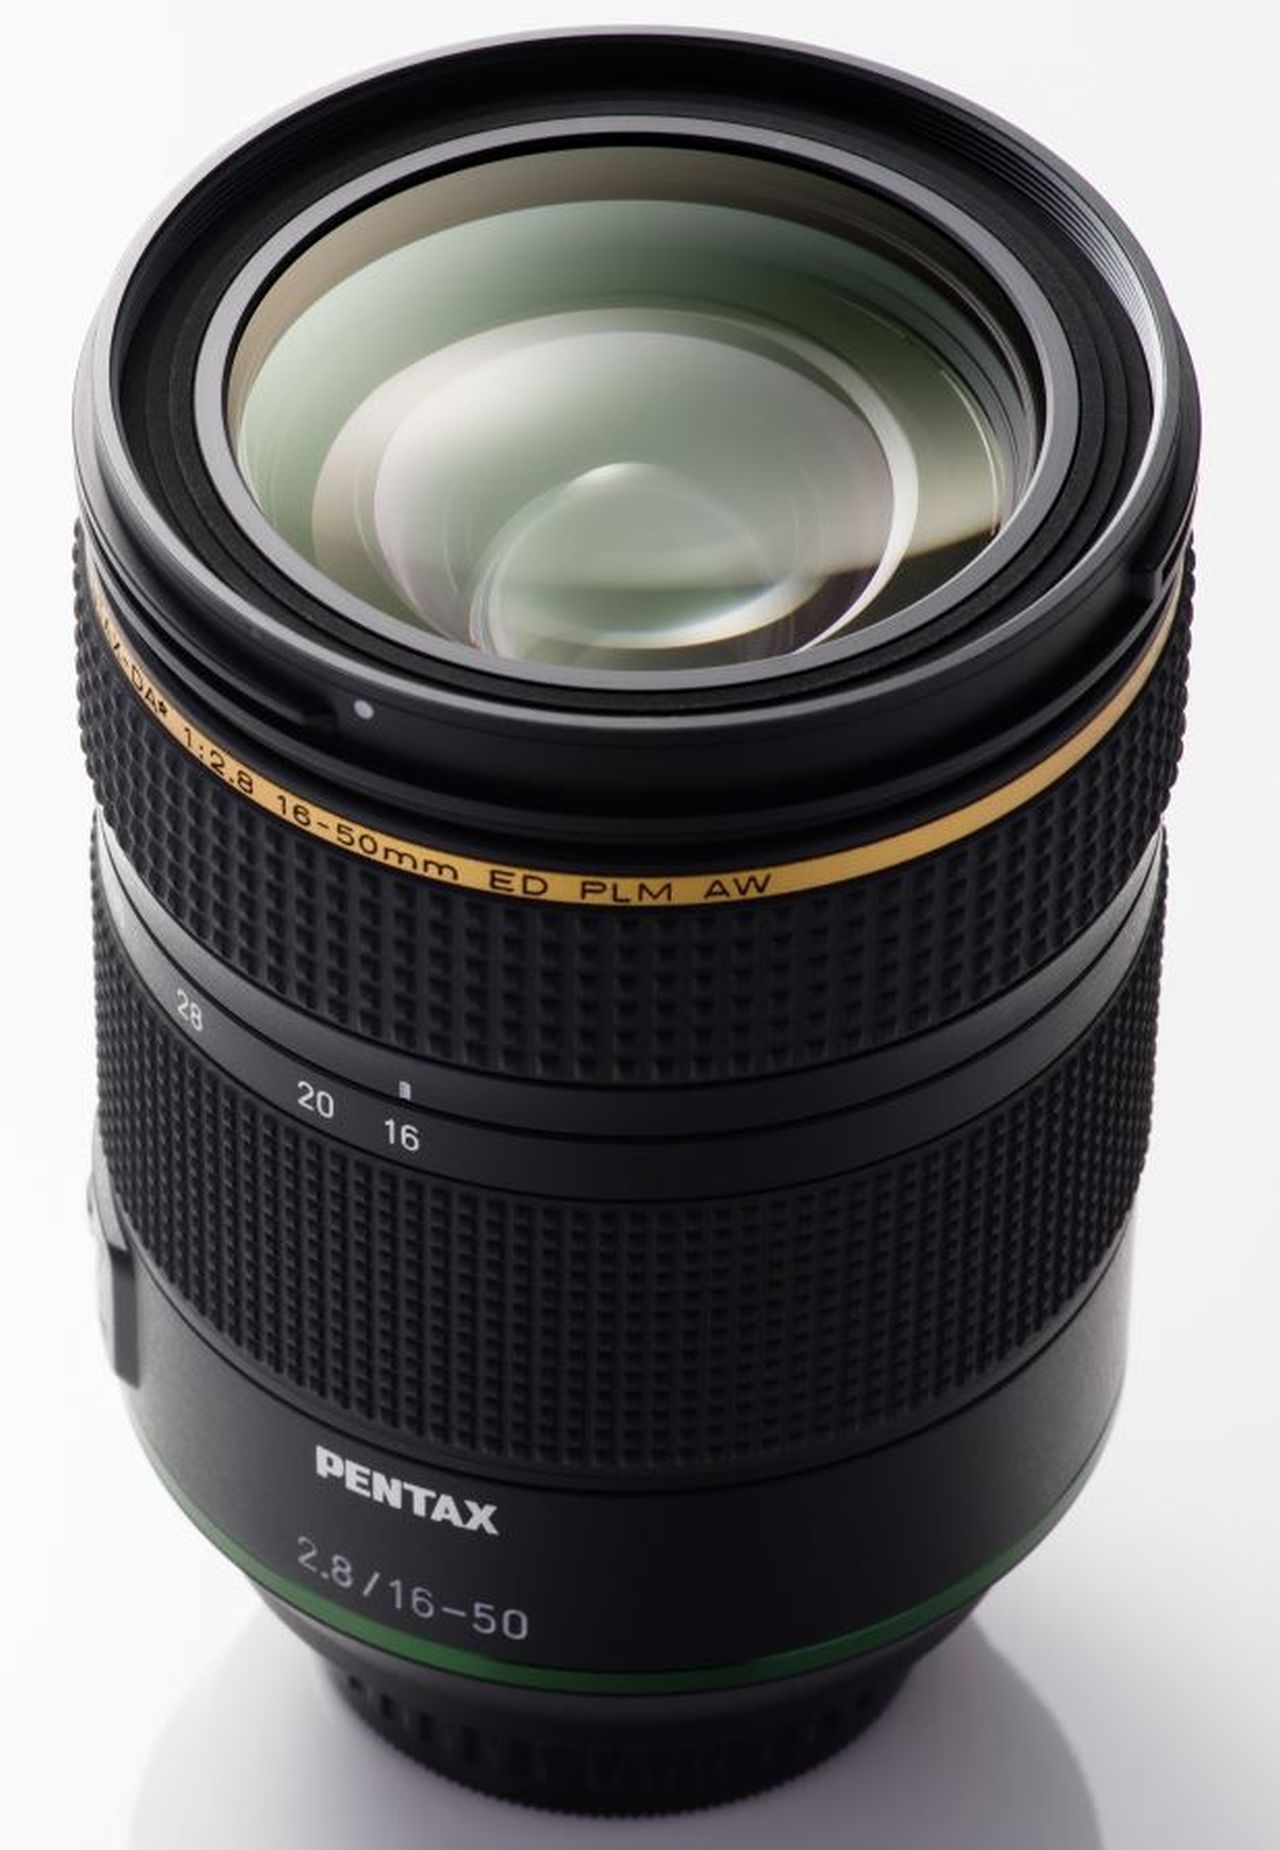 Pentax HD DA 16-50mm f2,8 ED PLM AW